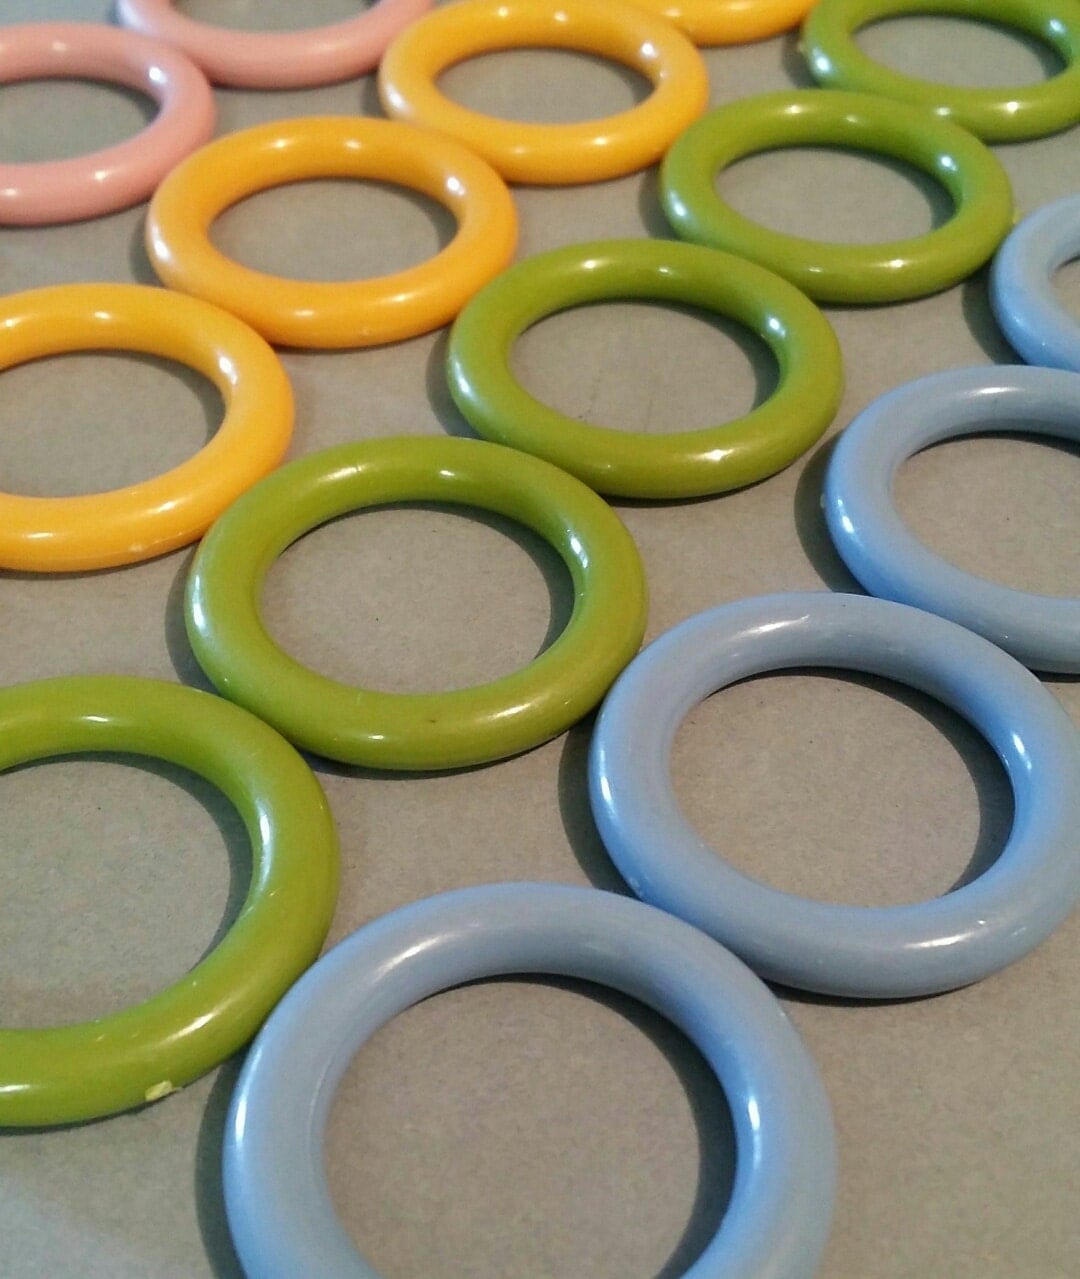 Lot of 24 Plastic Craft Rings 1 1/2 inch Macrame Rings